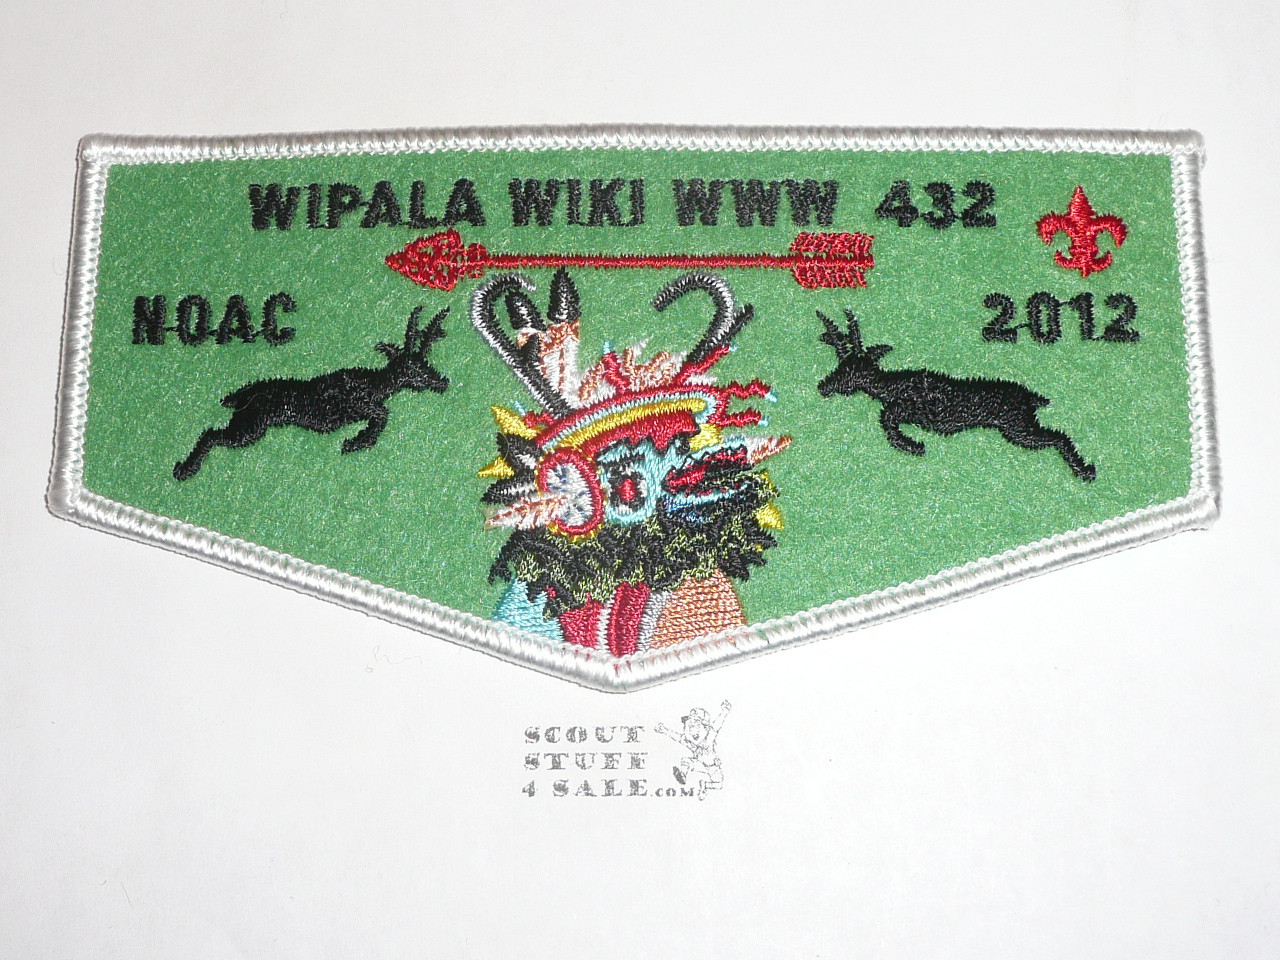 Order of the Arrow Lodge #432 Wipala Wiki 2012 NOAC Felt Flap Patch